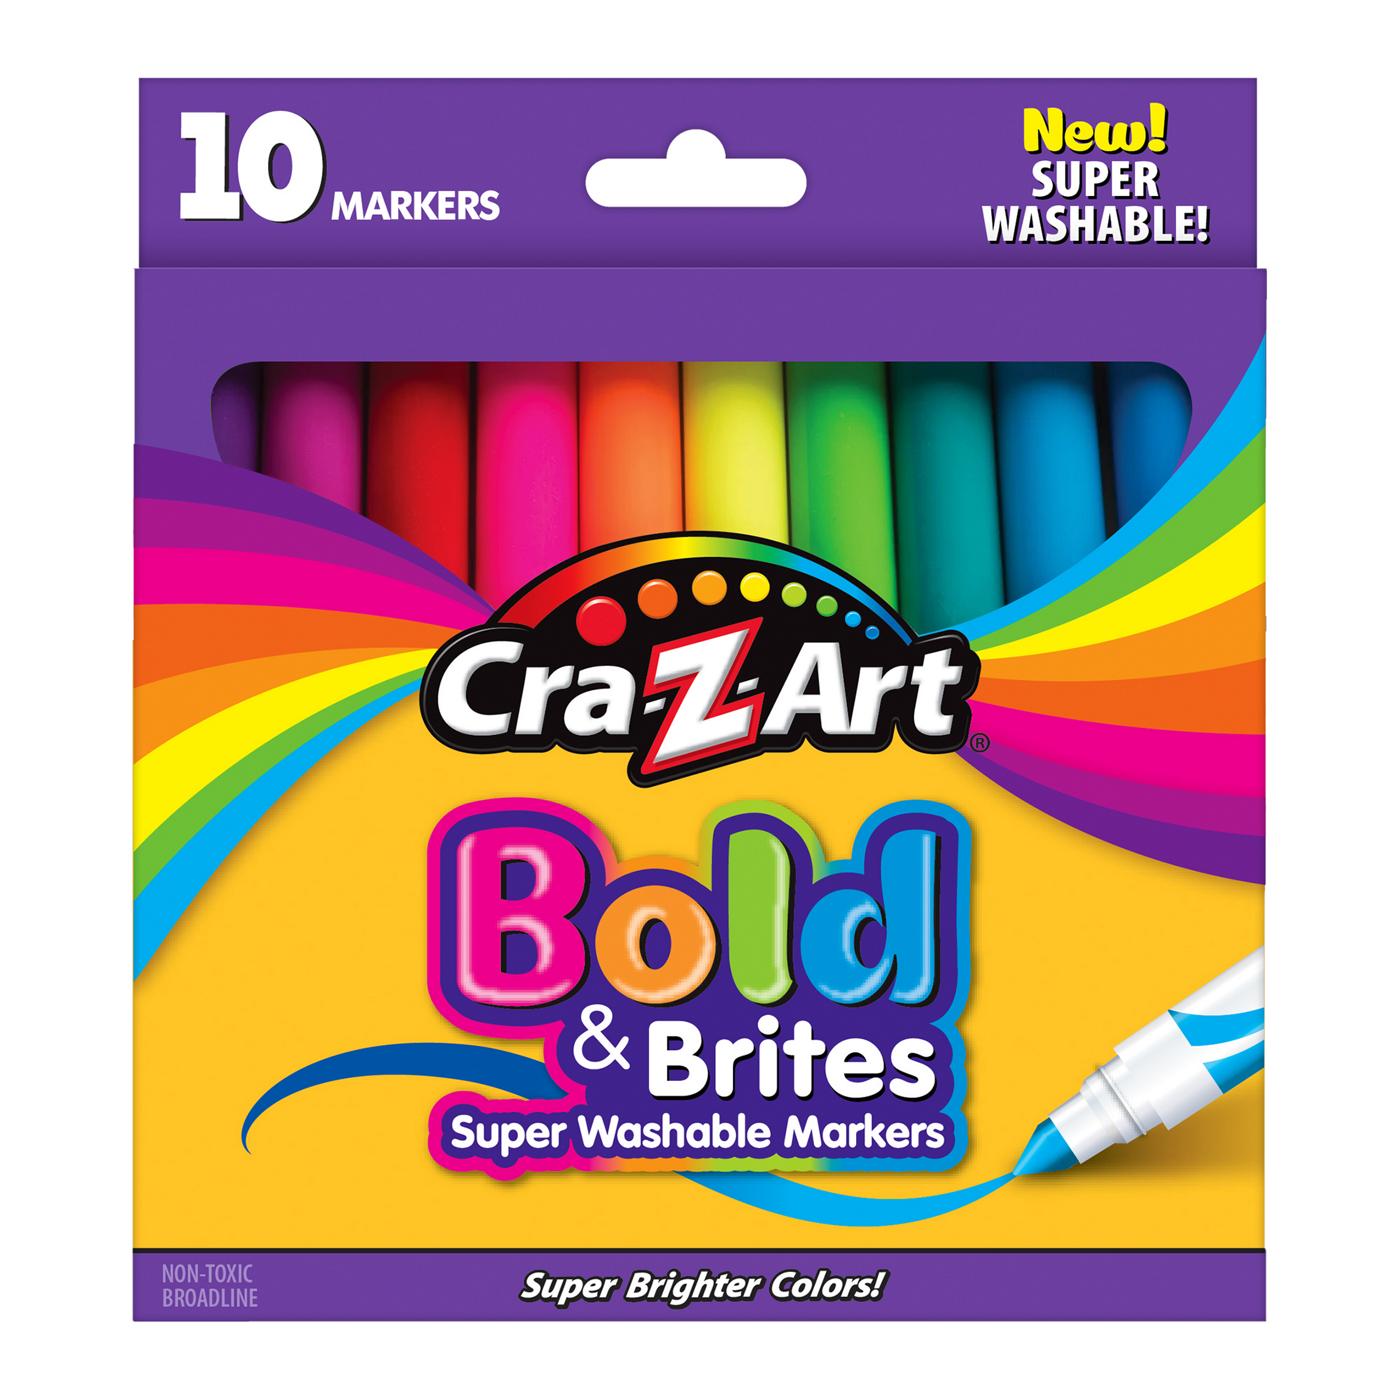 Cra-Z-Art Bold & Brites Super Washable Markers; image 1 of 5